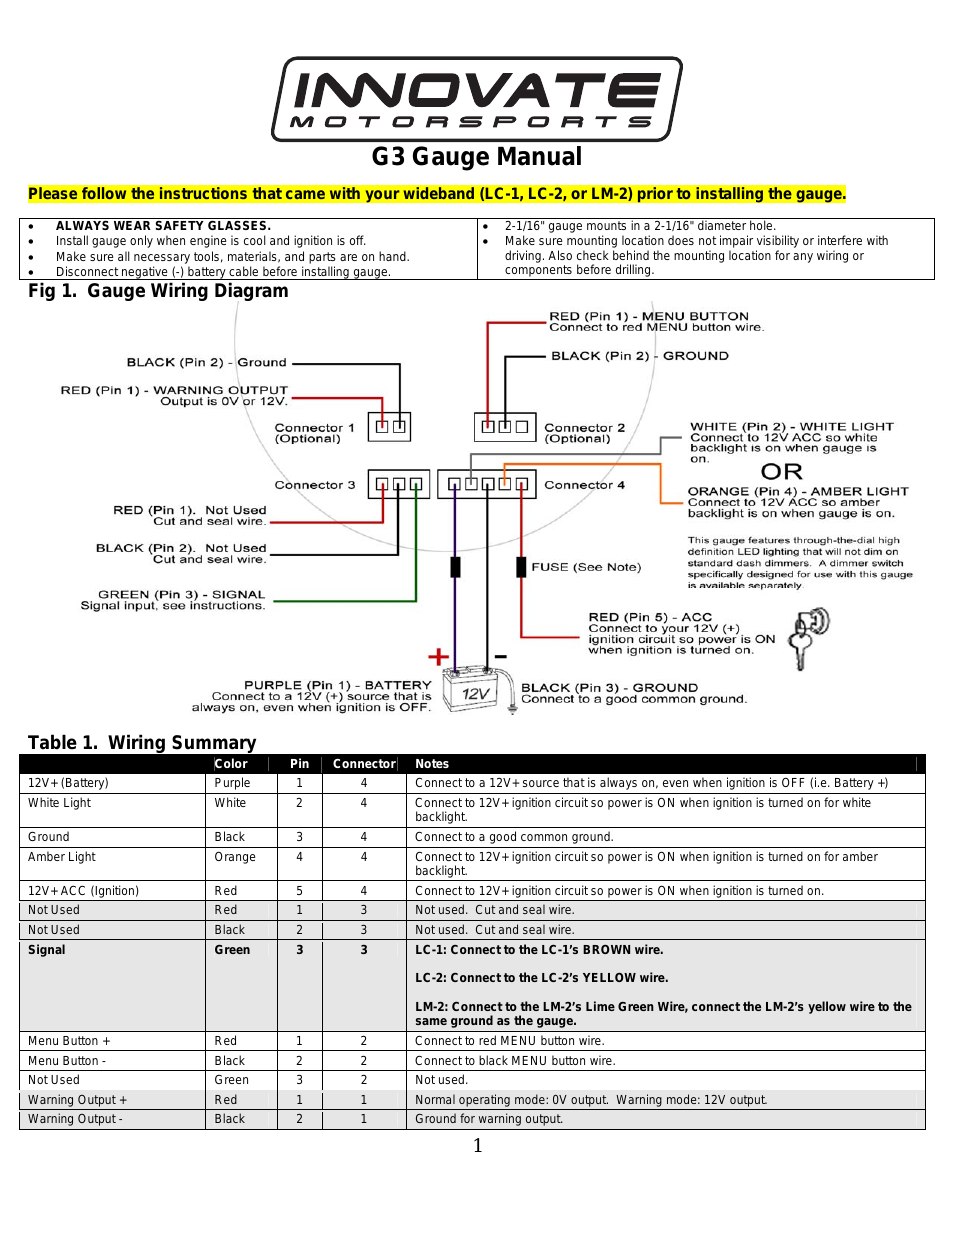 G3 Air/Fuel Gauge Manual (four connector model)